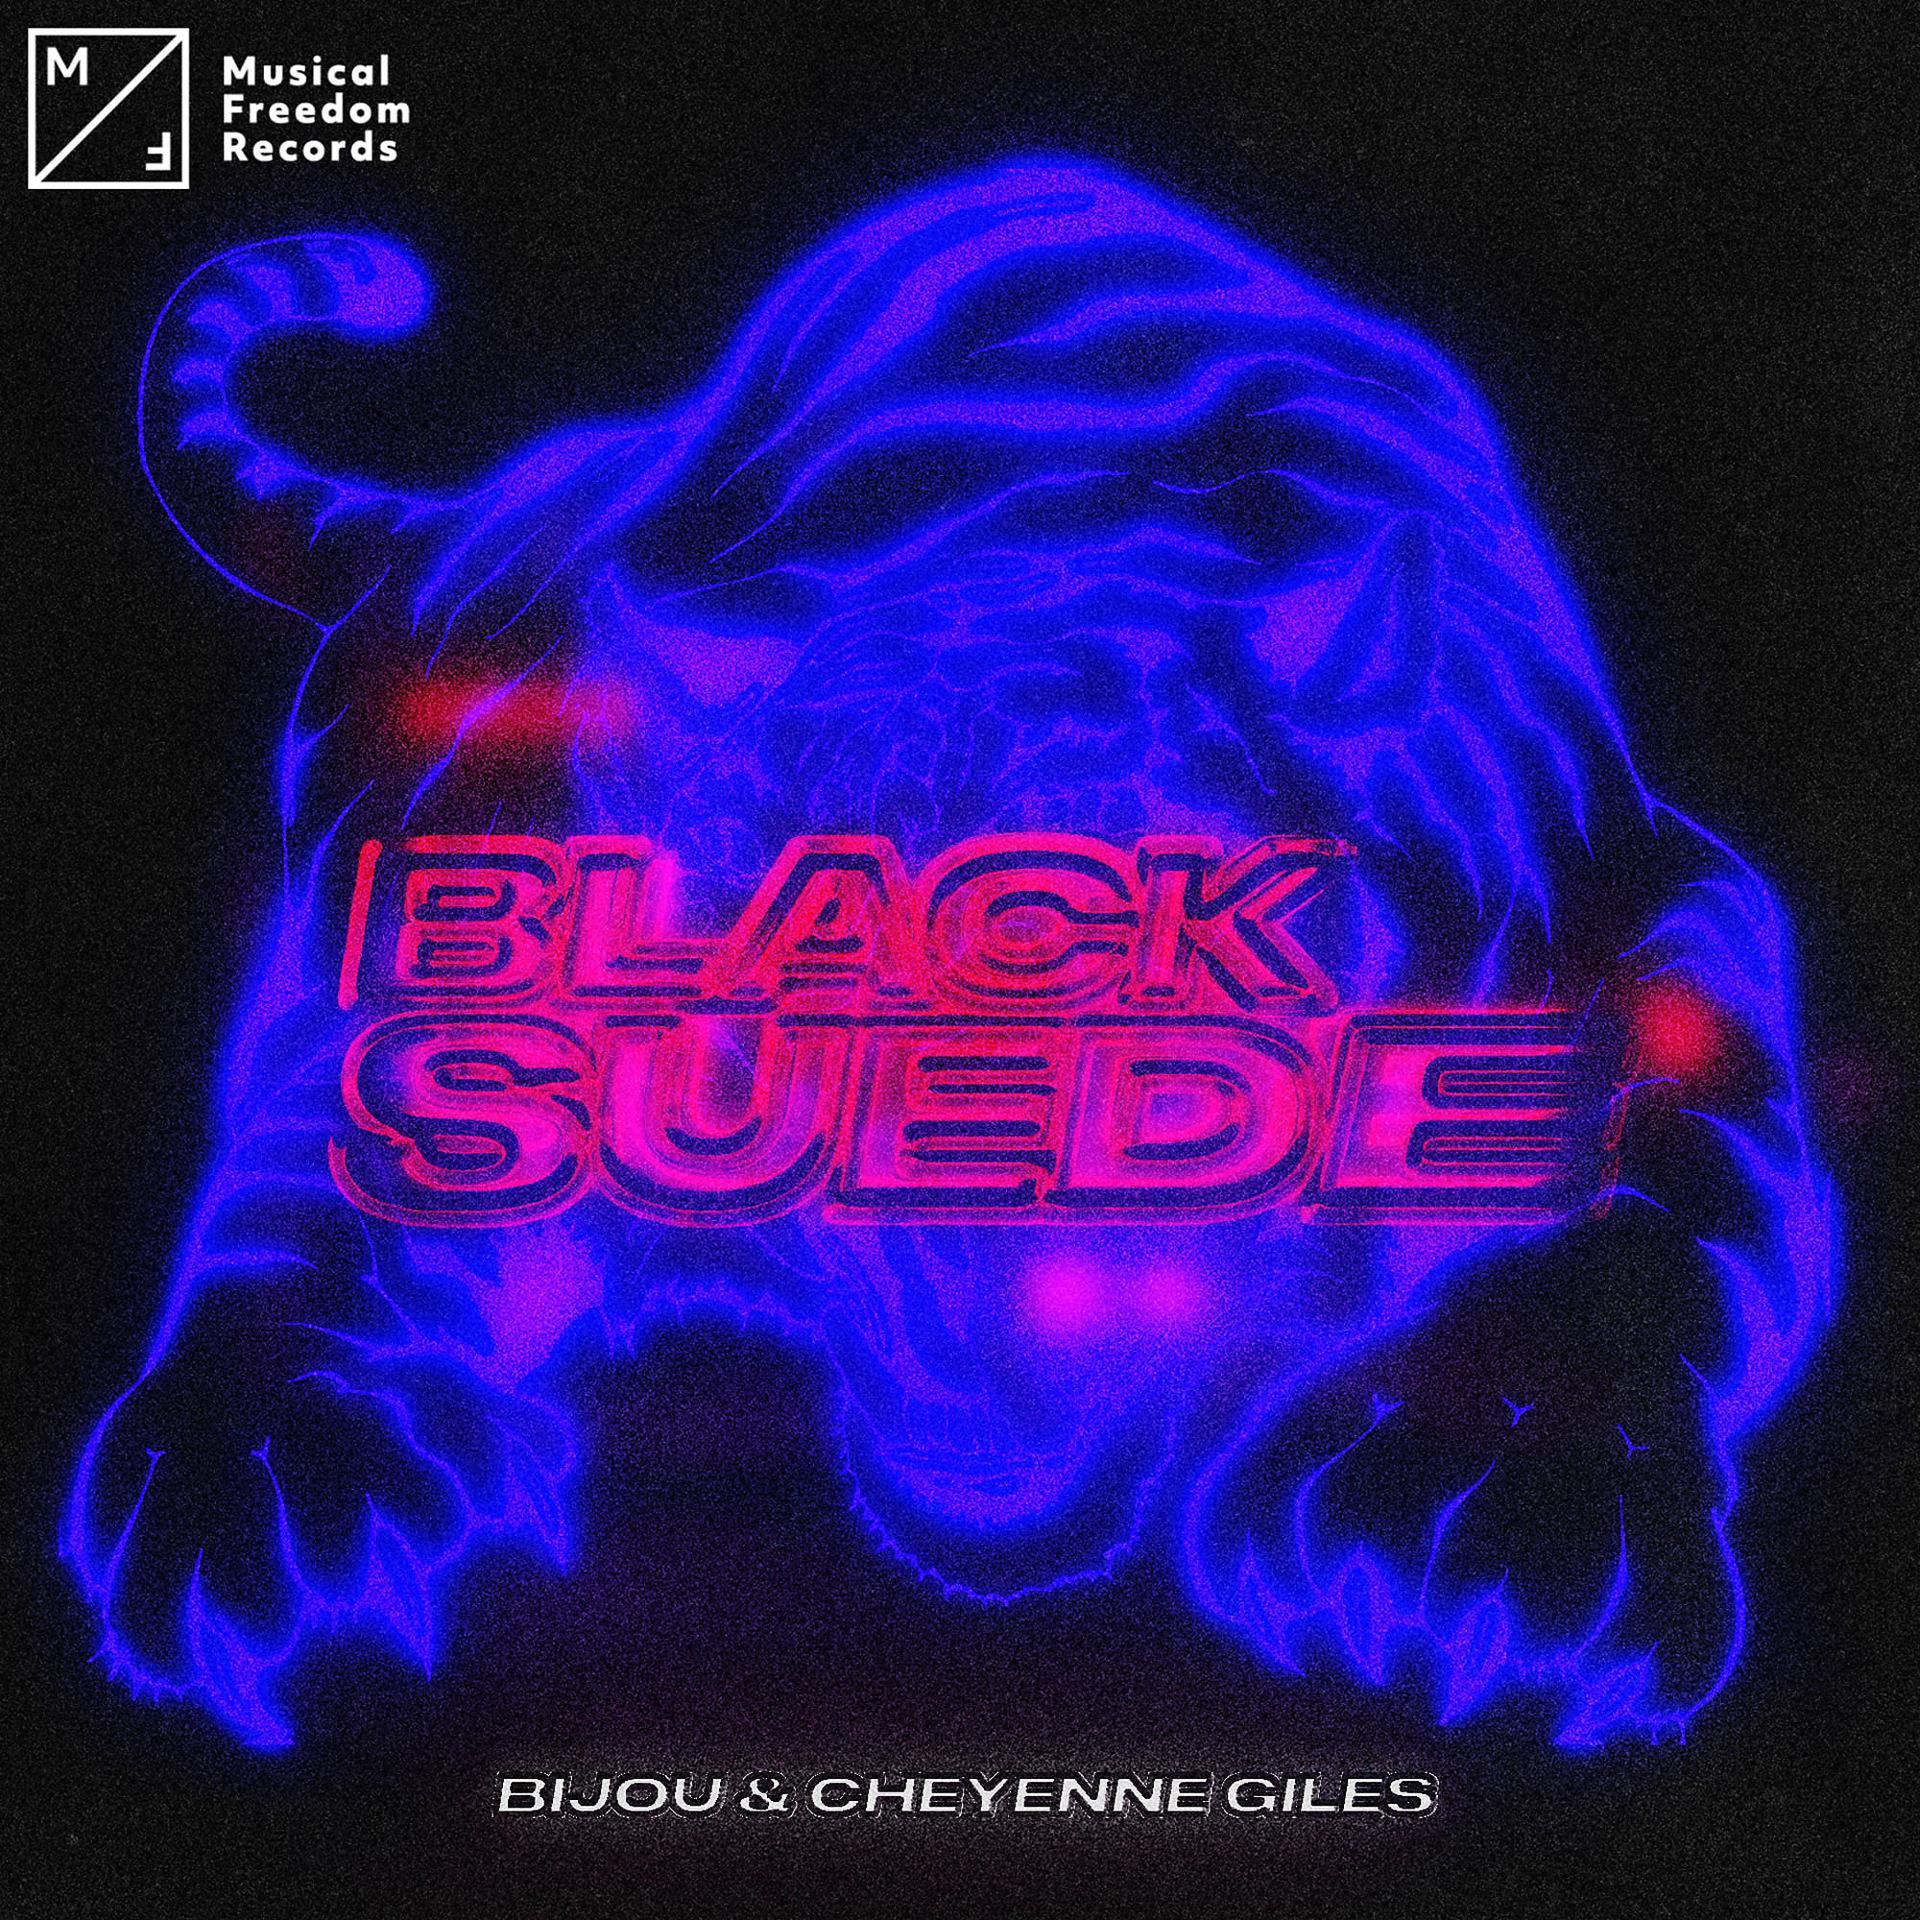 Постер к треку Bijou, Cheyenne Giles - Black Suede